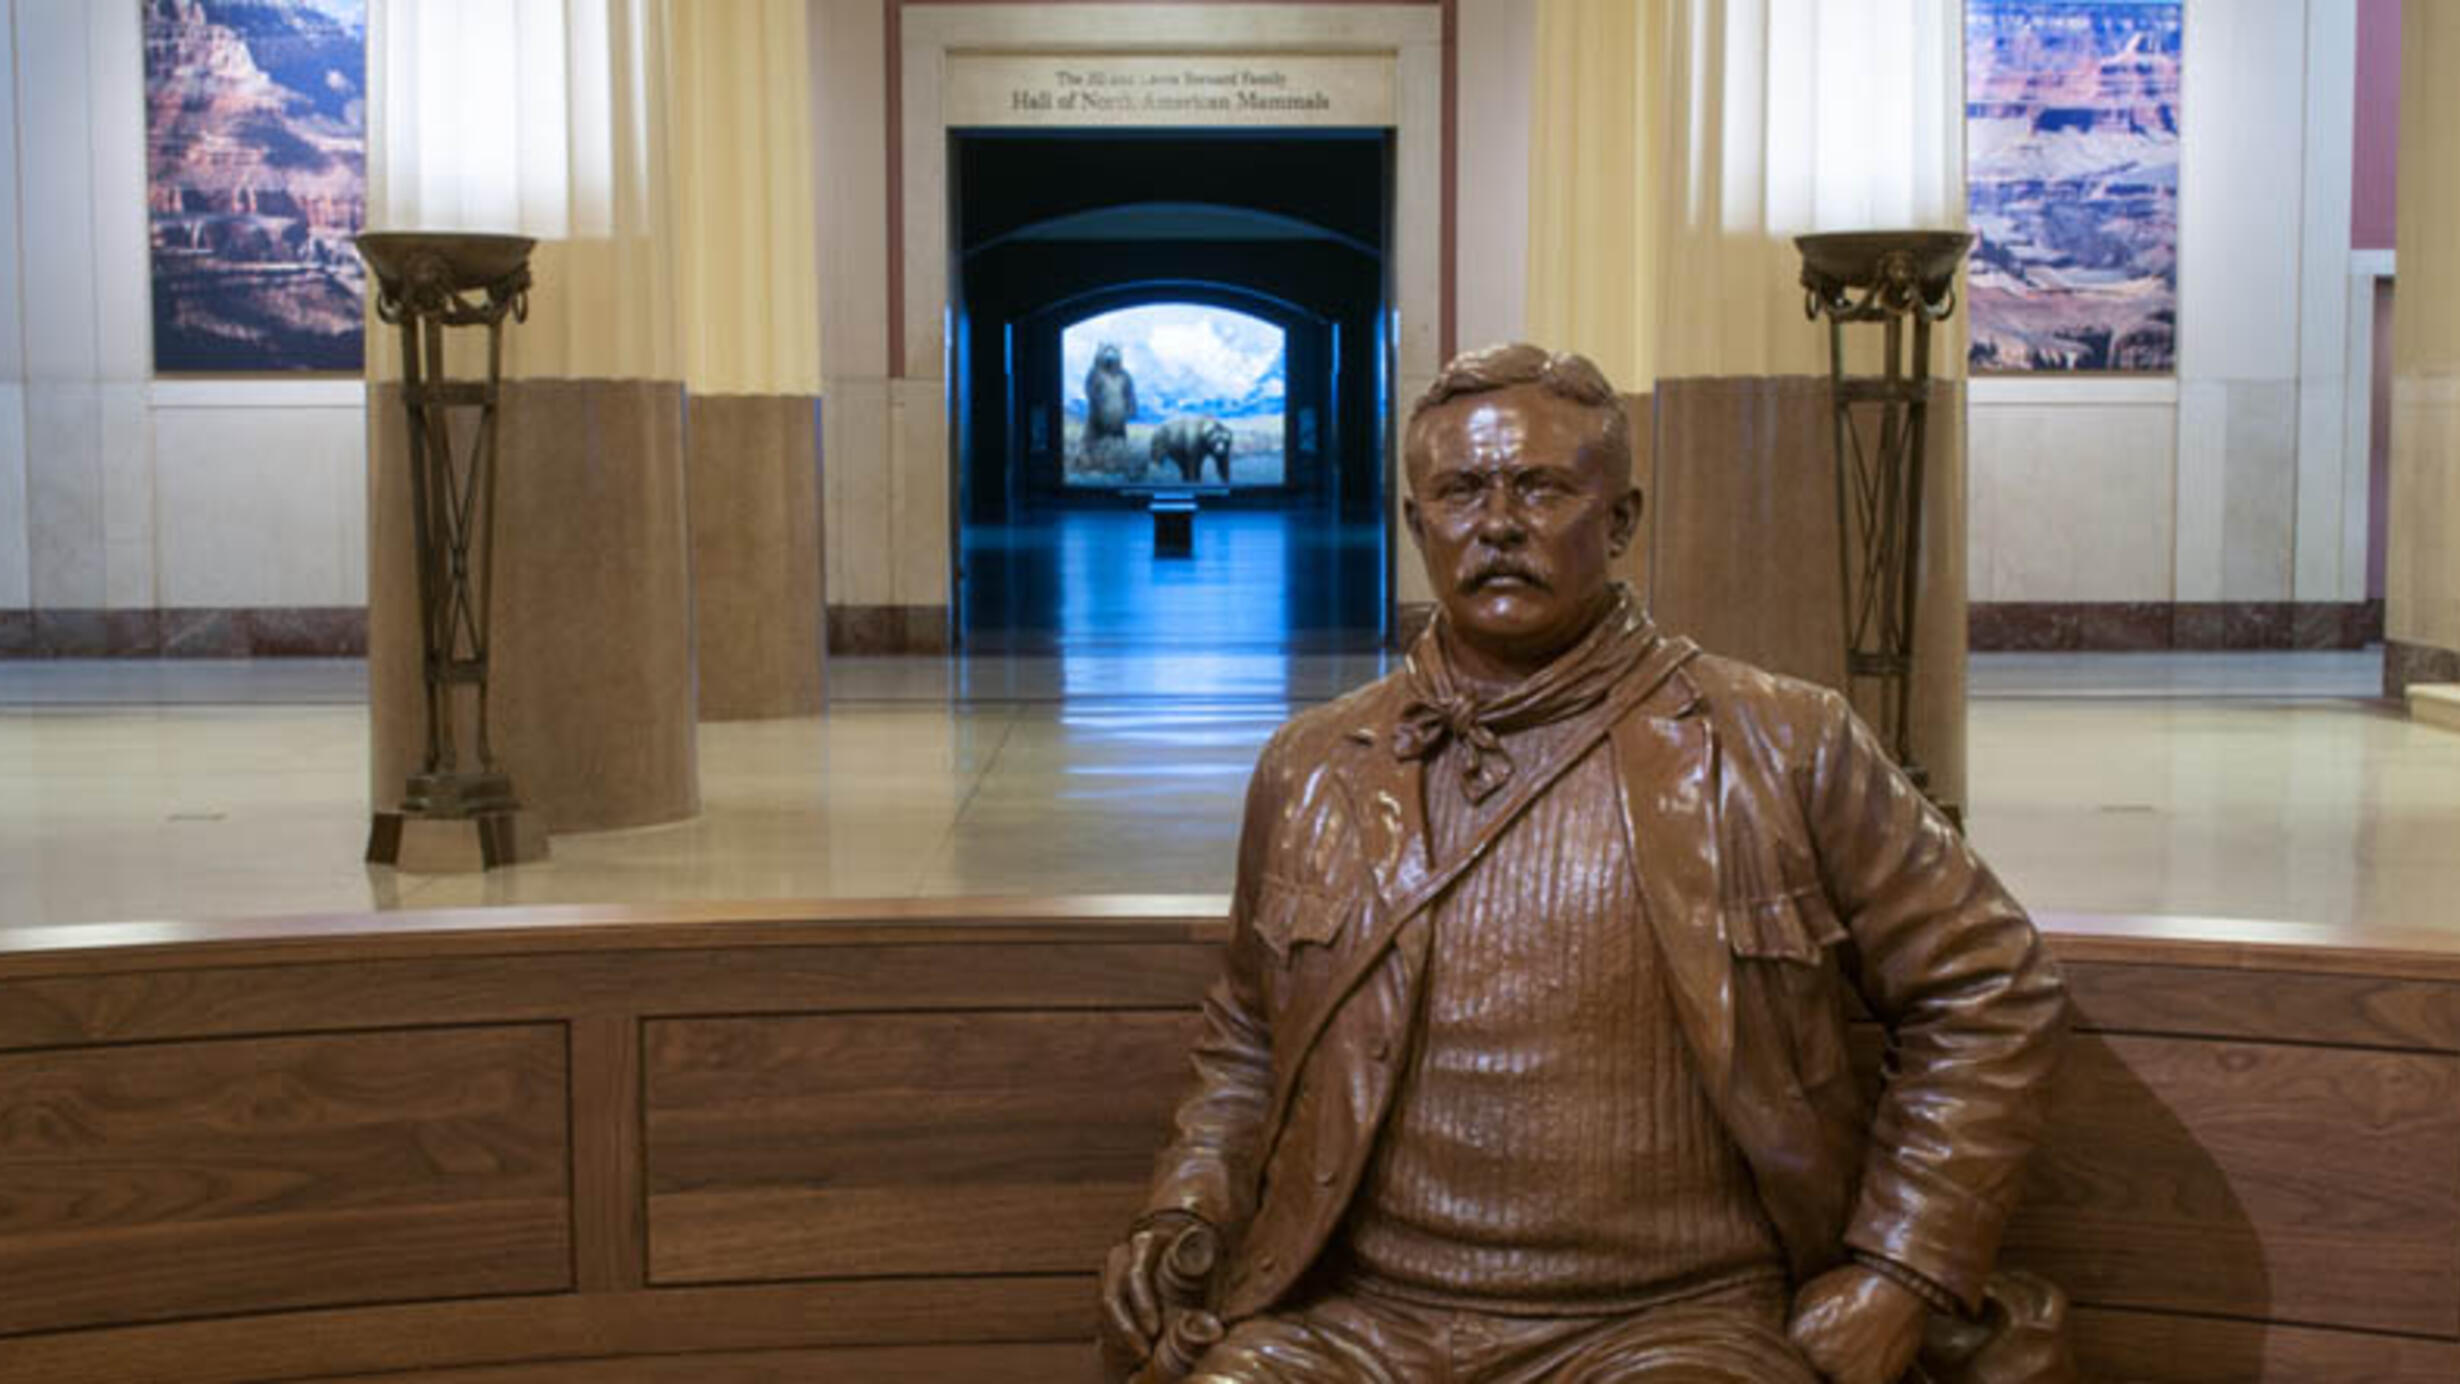 Theodore Roosevelt Sculpture